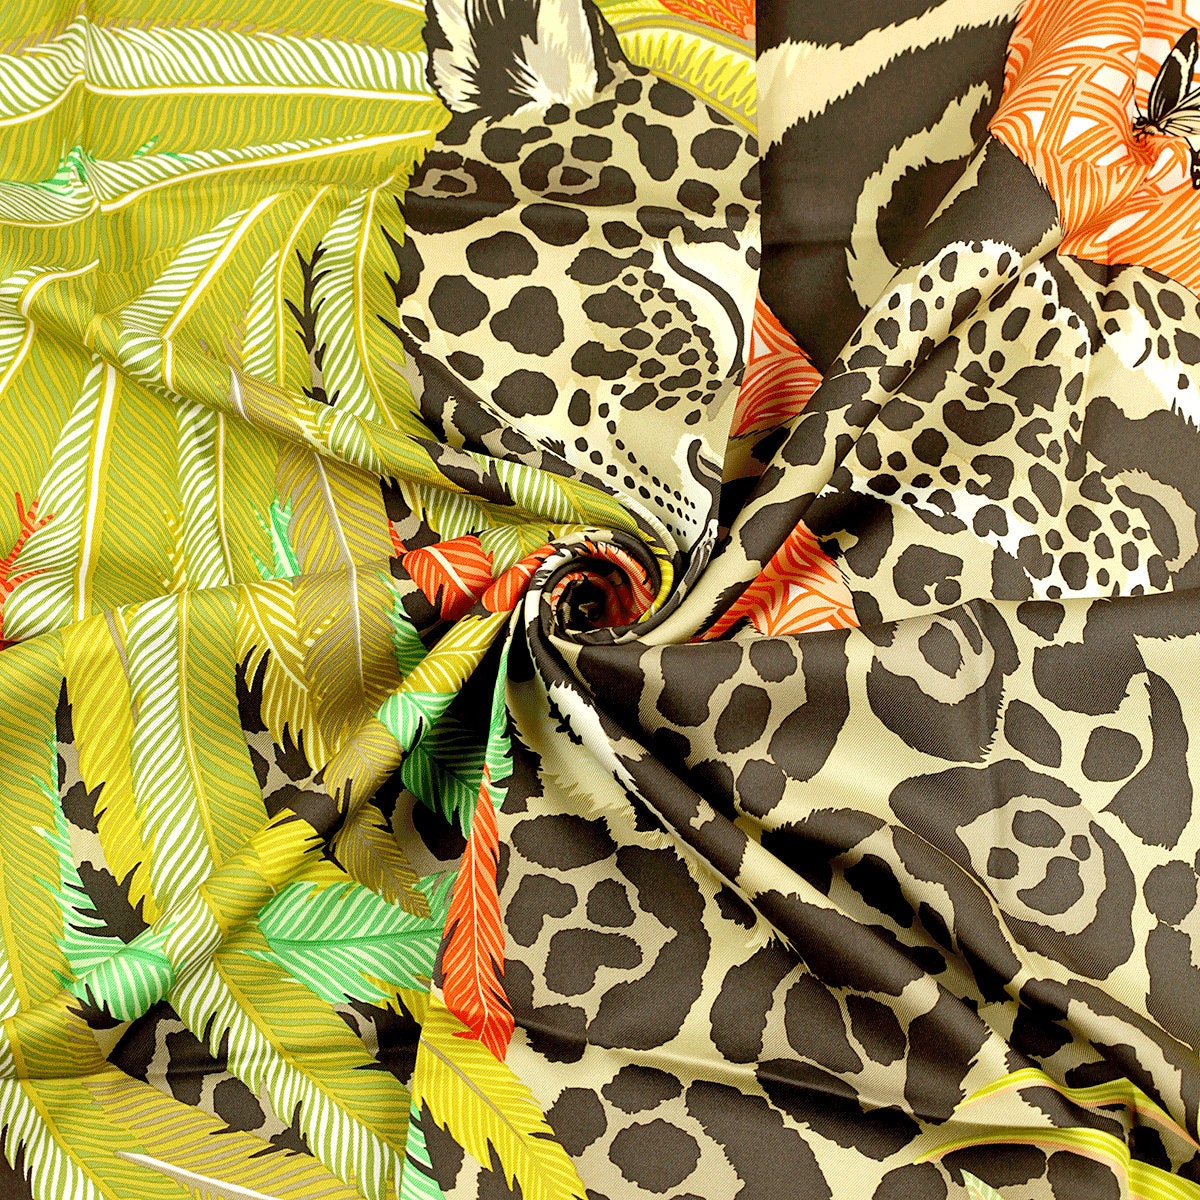 Hermes Scarf "Jaguar Quetzal" by Alice Shirley 90cm Silk | Carre Foulard